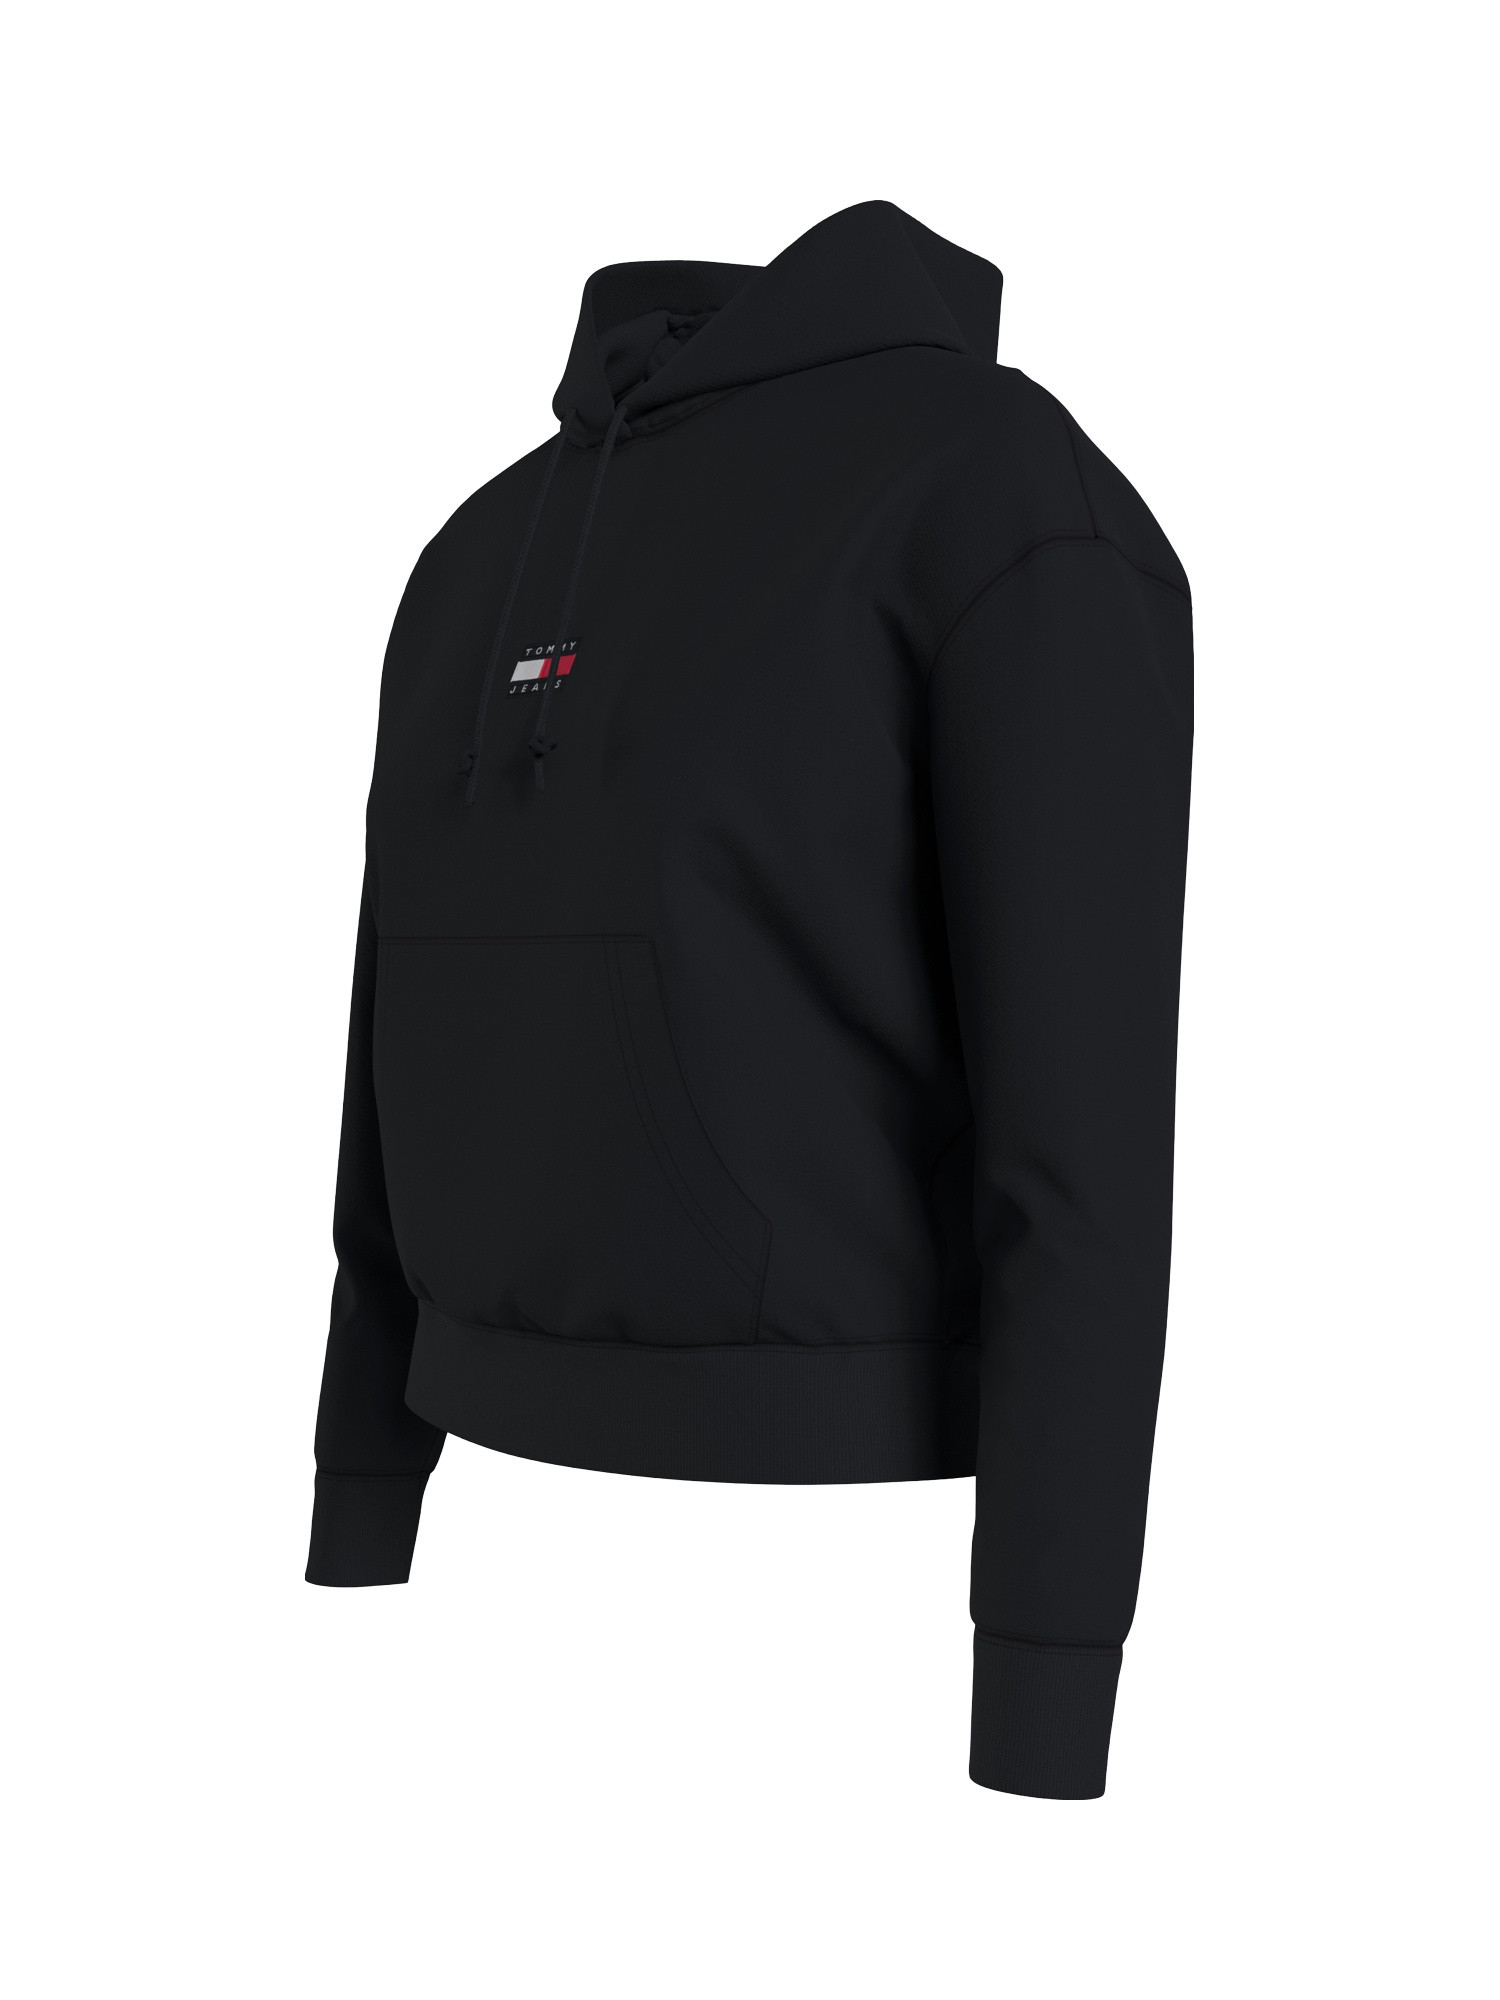 Tommy Jeans - Cotton hooded sweatshirt, Black, large image number 3